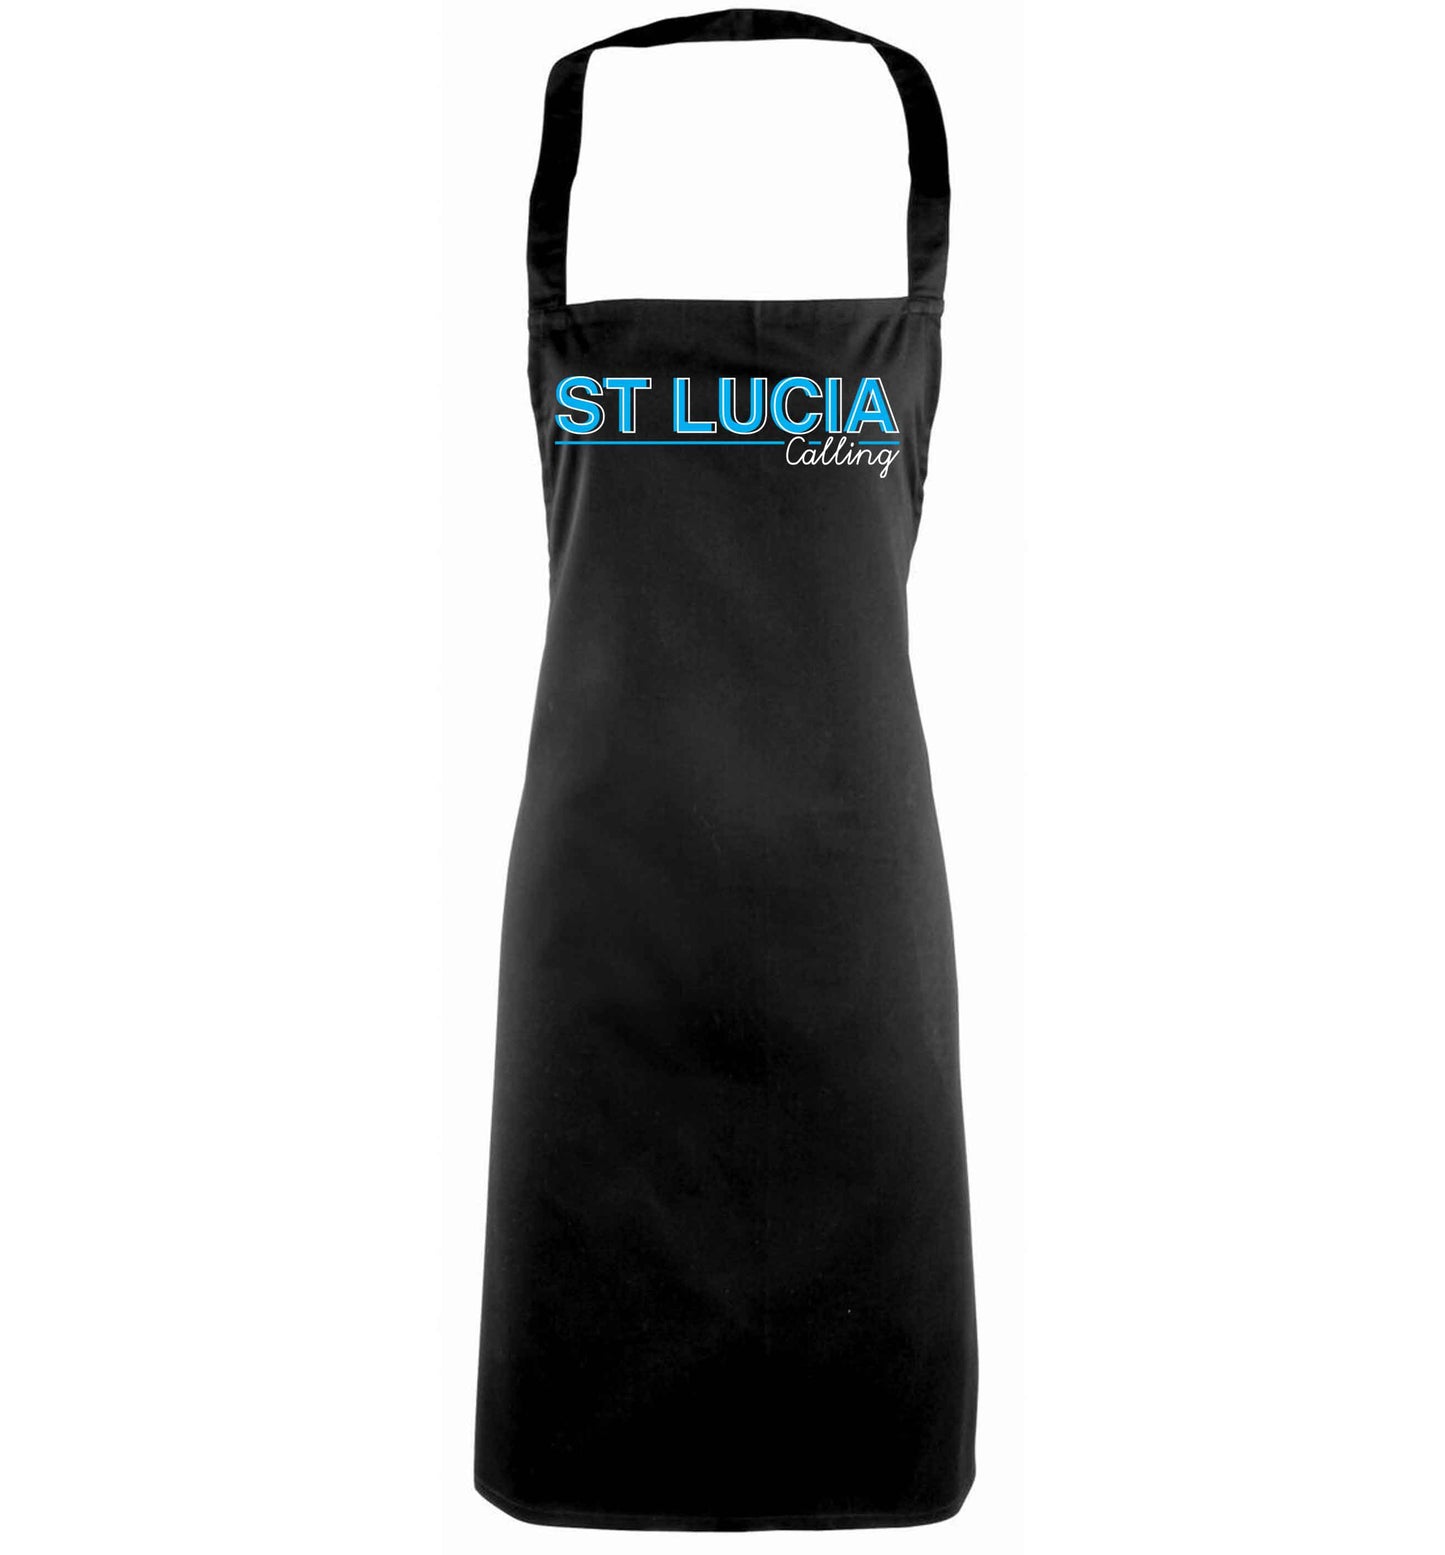 St Lucia calling black apron